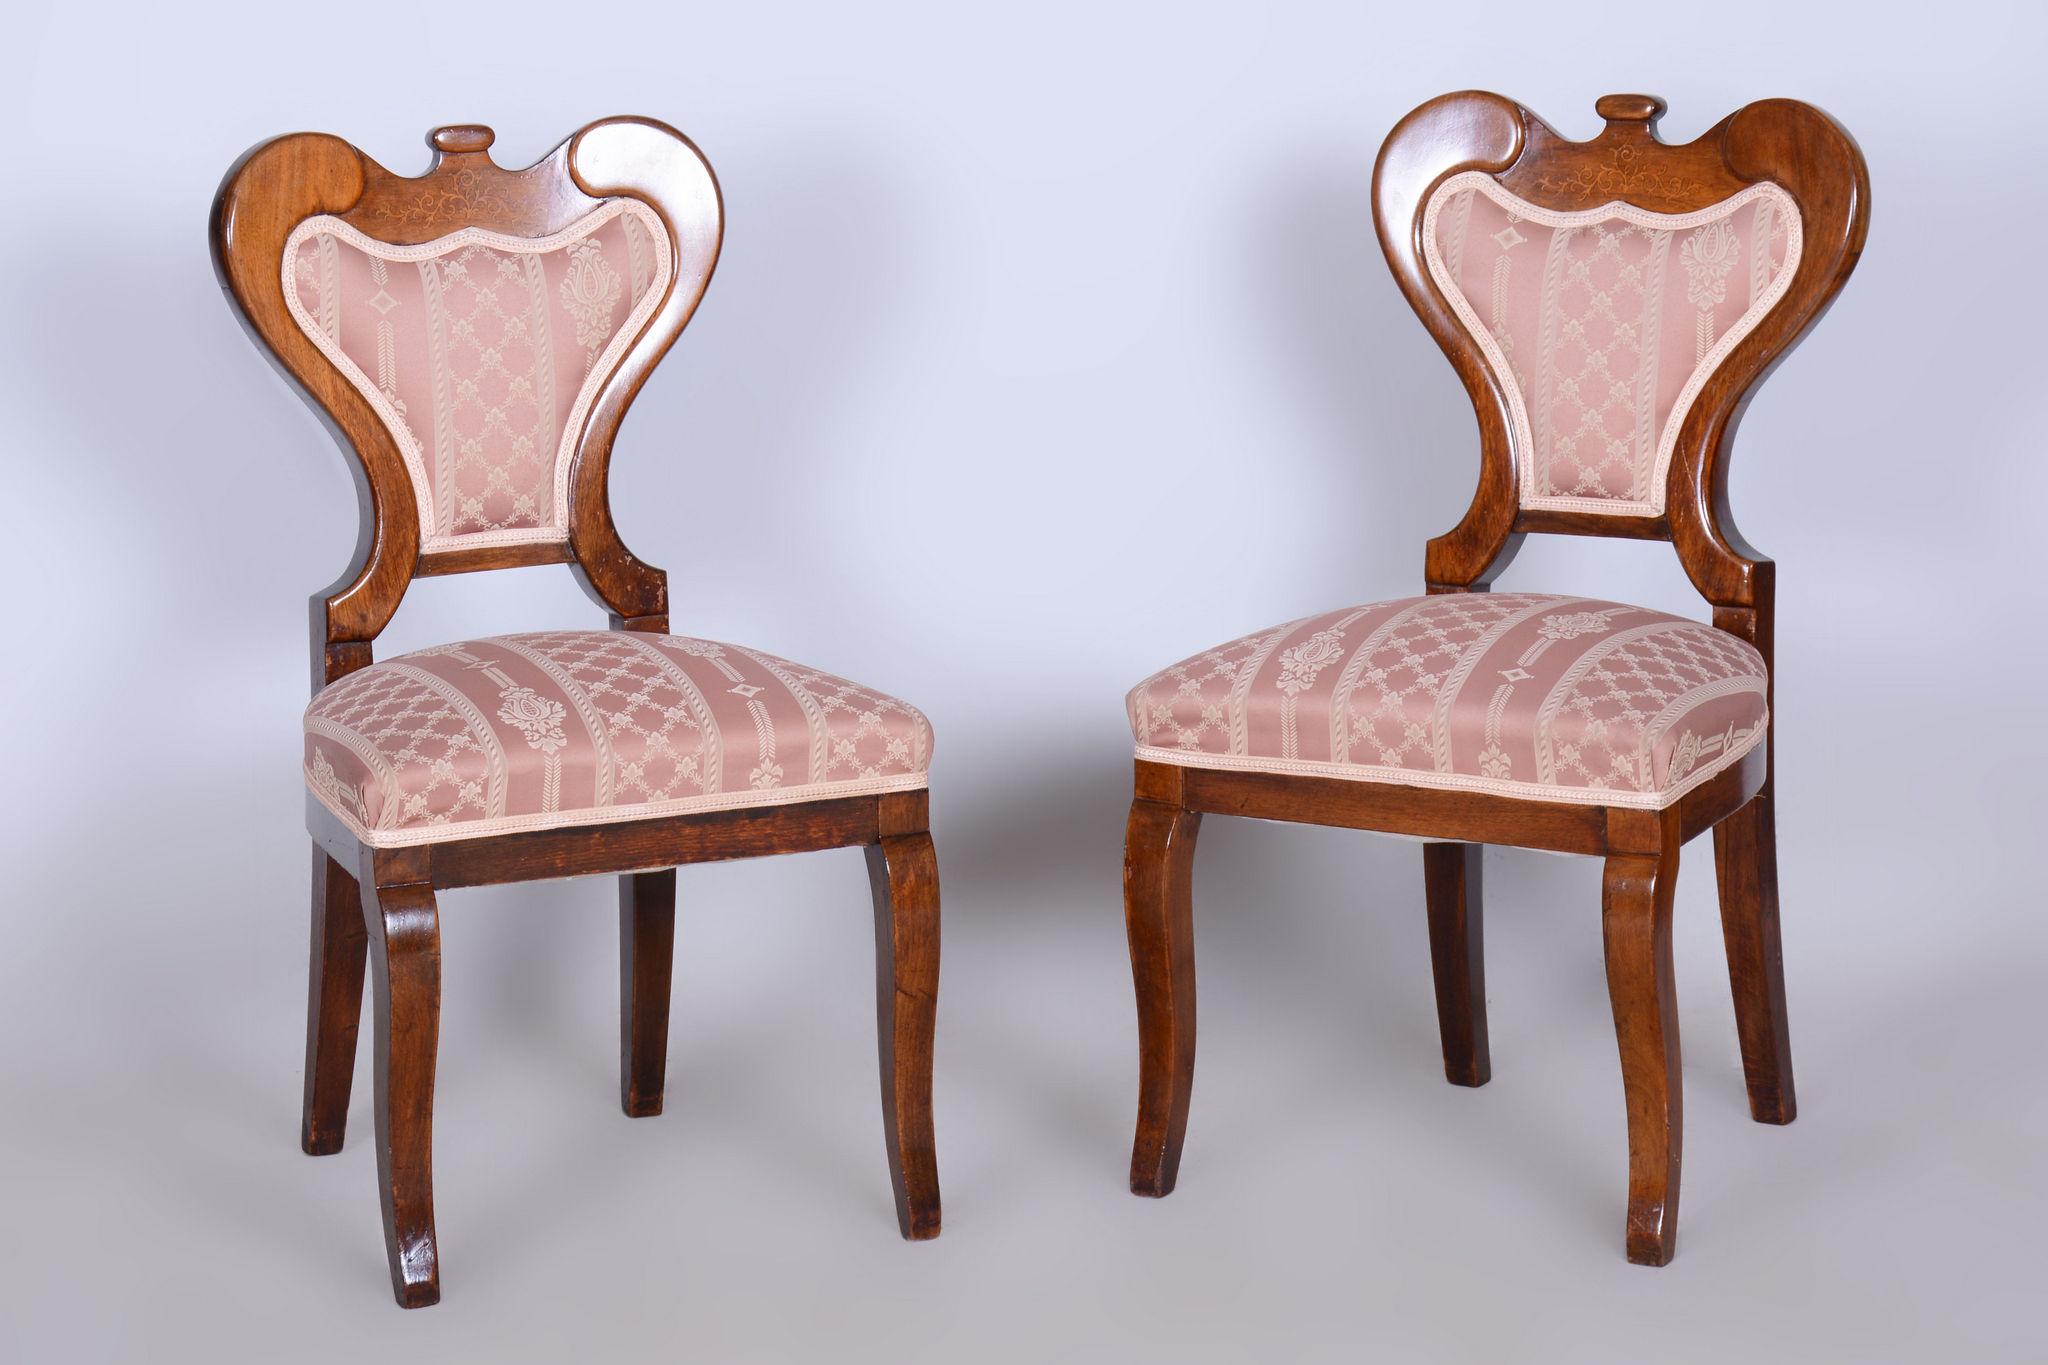 Restored Biedermeier Seating Set, Oak Walnut, Stable Constructon, Austria, 1840s For Sale 1